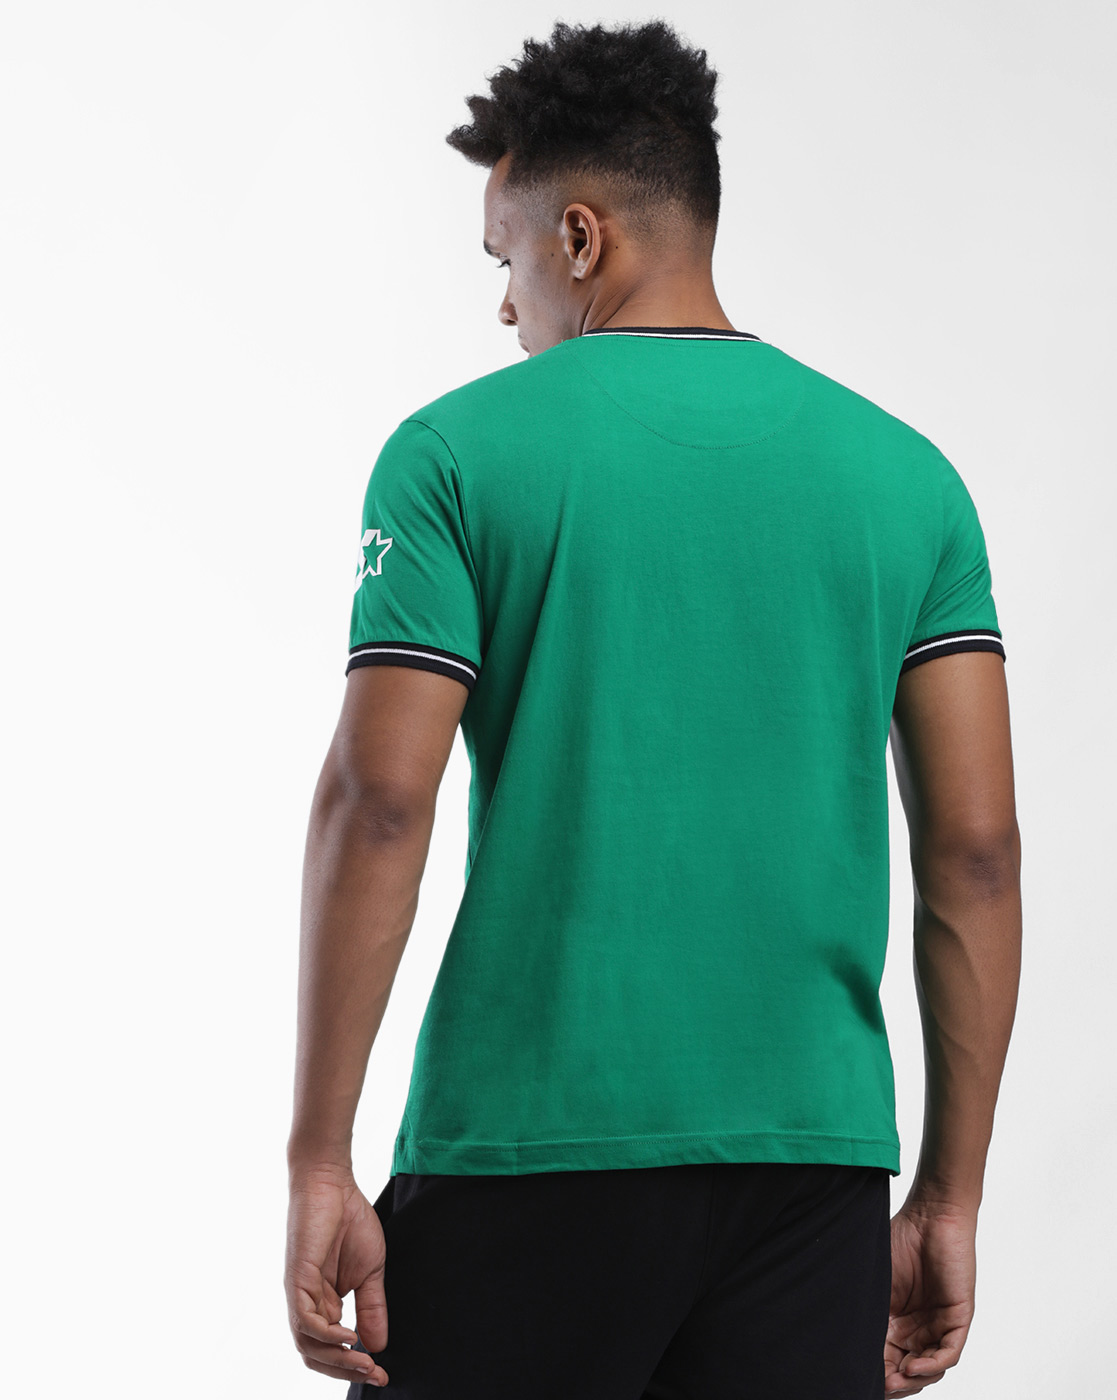 Starter Men Printed Green T-Shirt